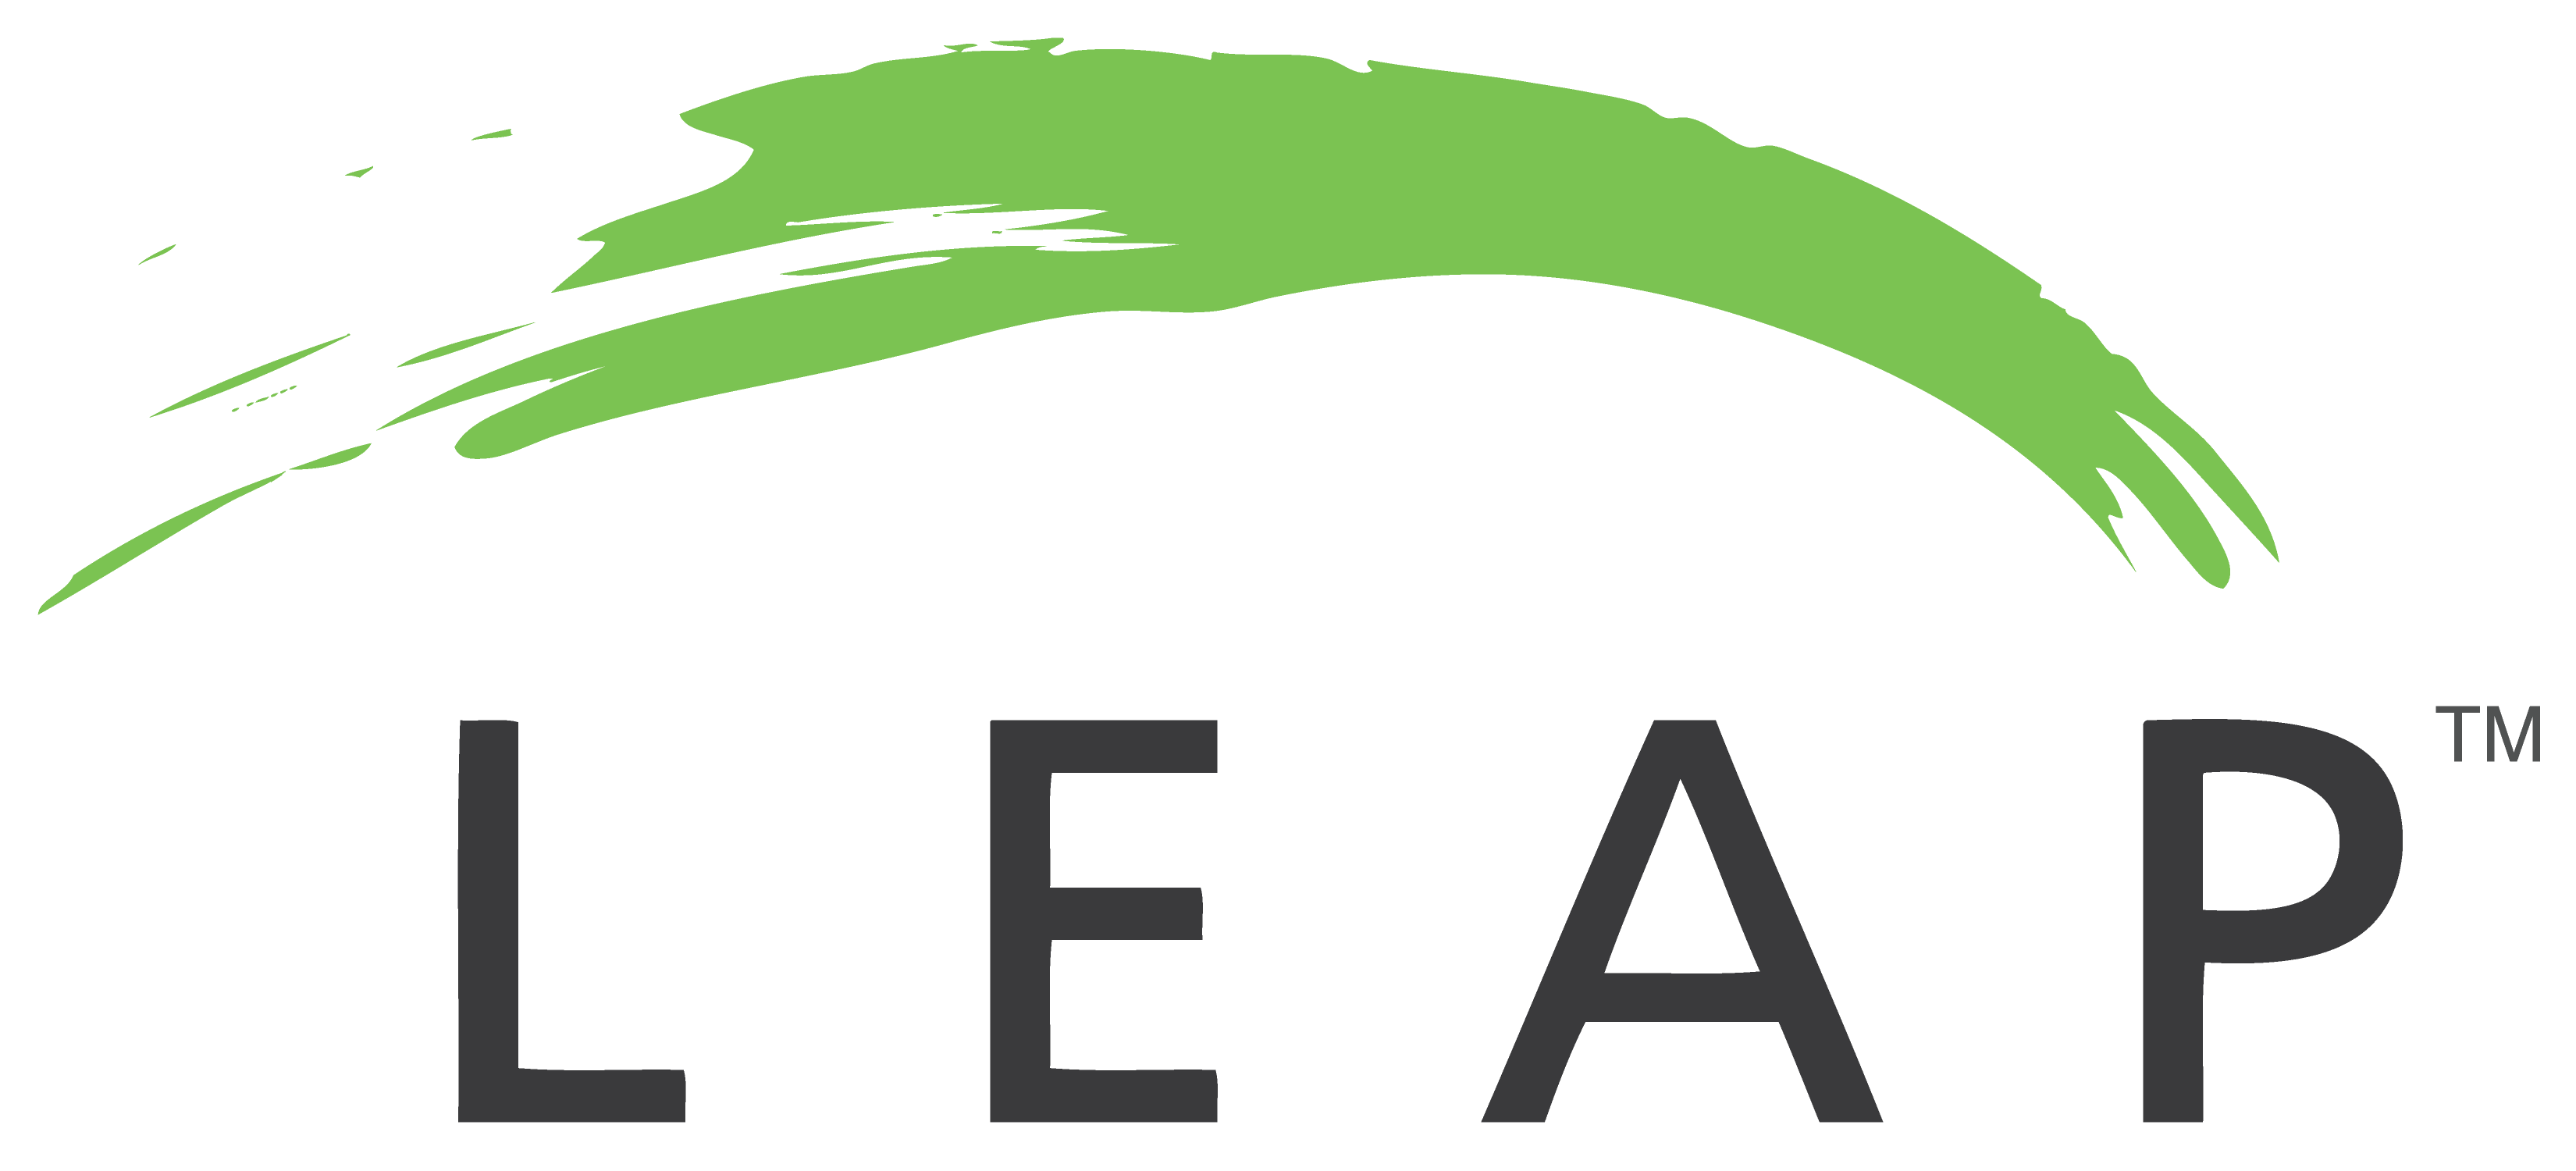 Leap Foundation logo